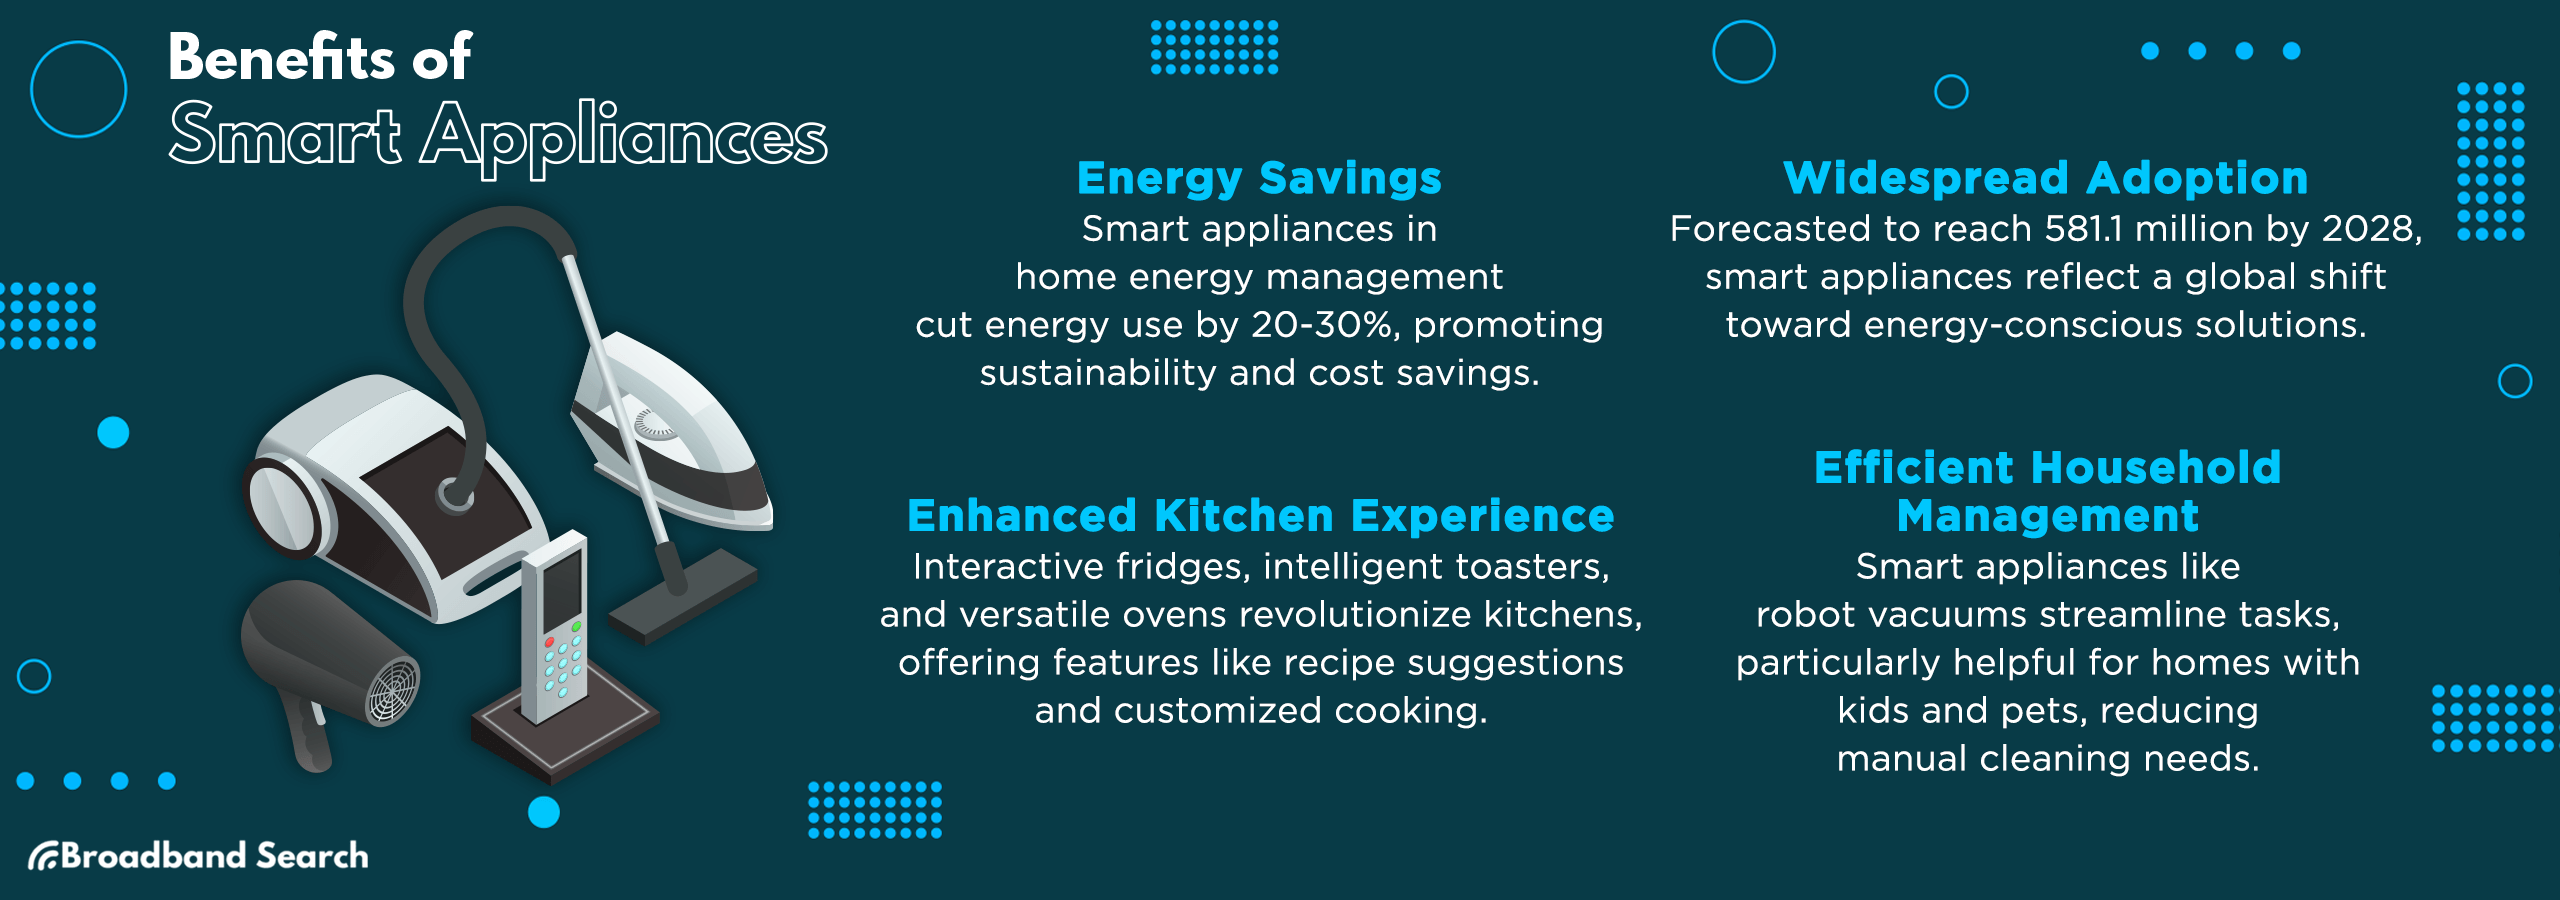 four benefits of using Smart appliances